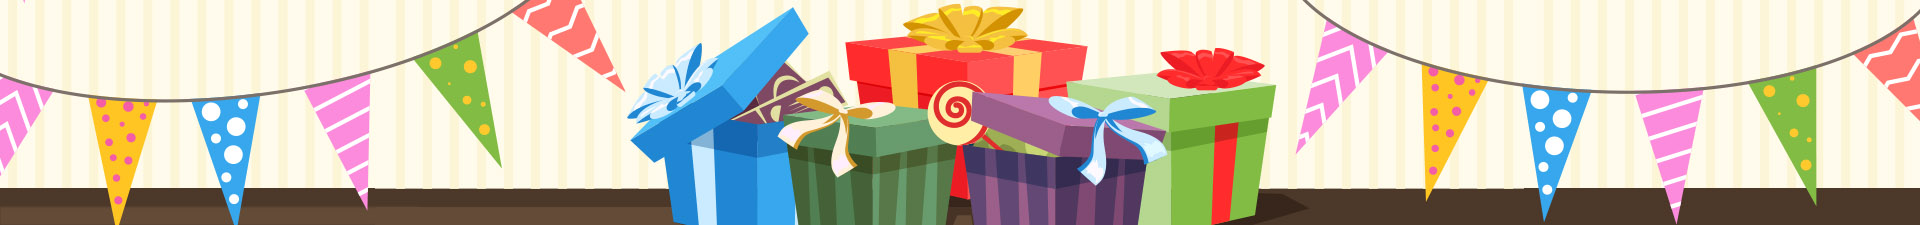 Online wholesale children's gift items